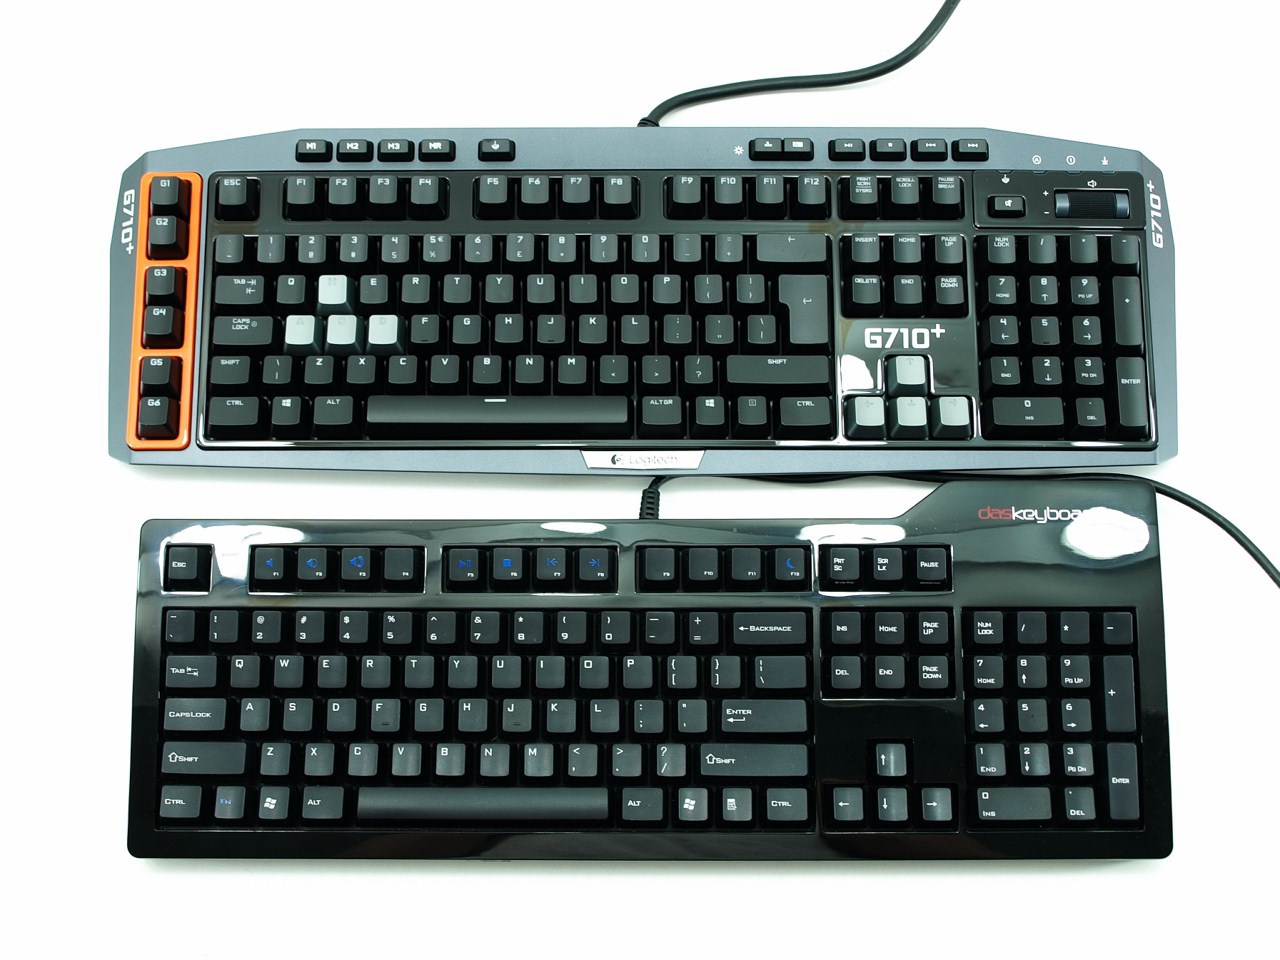 G710+ Gaming Keyboard Review